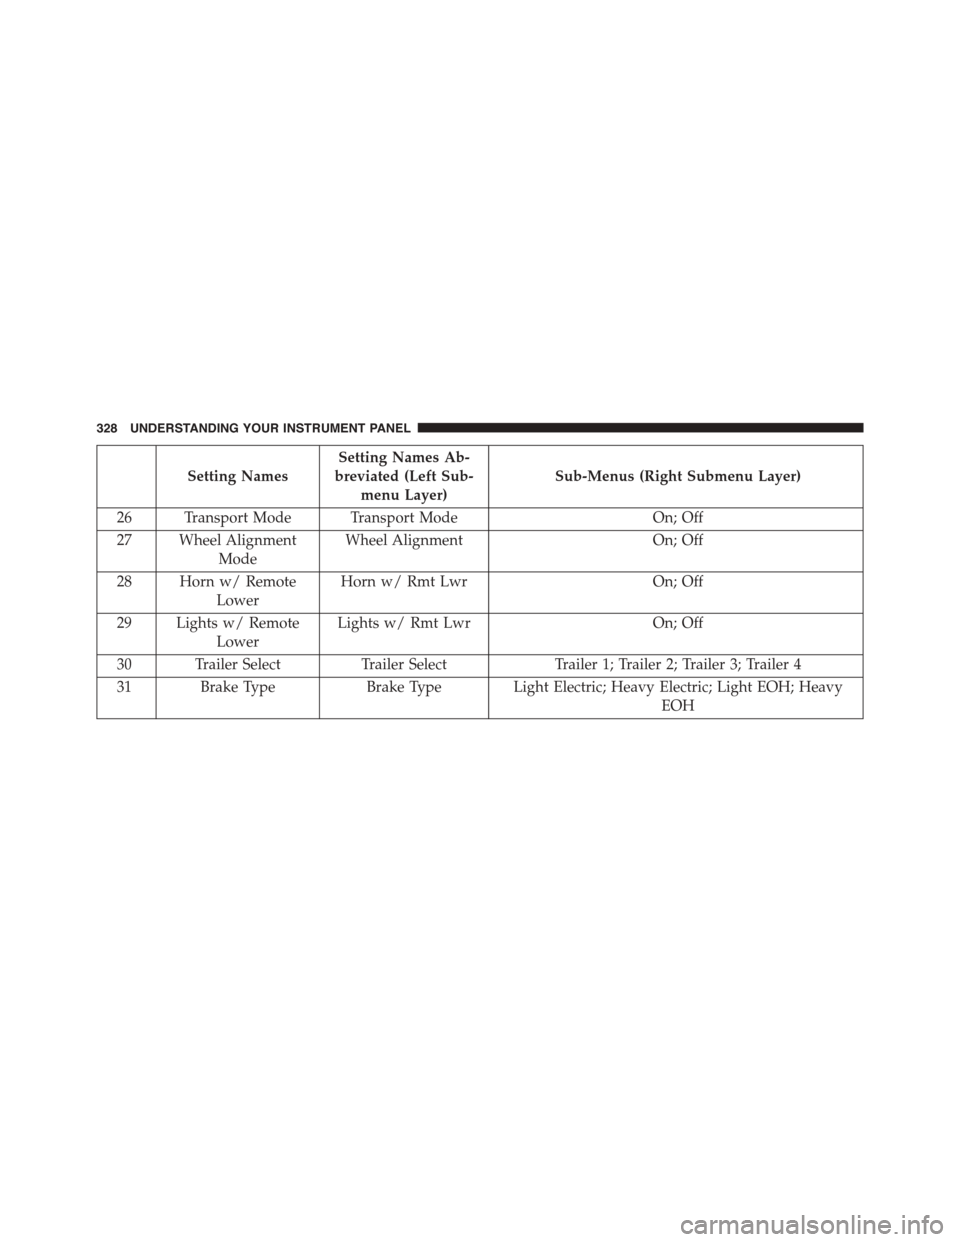 Ram 1500 2015 Owners Guide Setting Names
Setting Names Ab-
breviated (Left Sub-
menu Layer)
Sub-Menus (Right Submenu Layer)
26 Transport Mode Transport ModeOn; Off
27 Wheel Alignment
Mode
Wheel AlignmentOn; Off
28 Horn w/ Remot